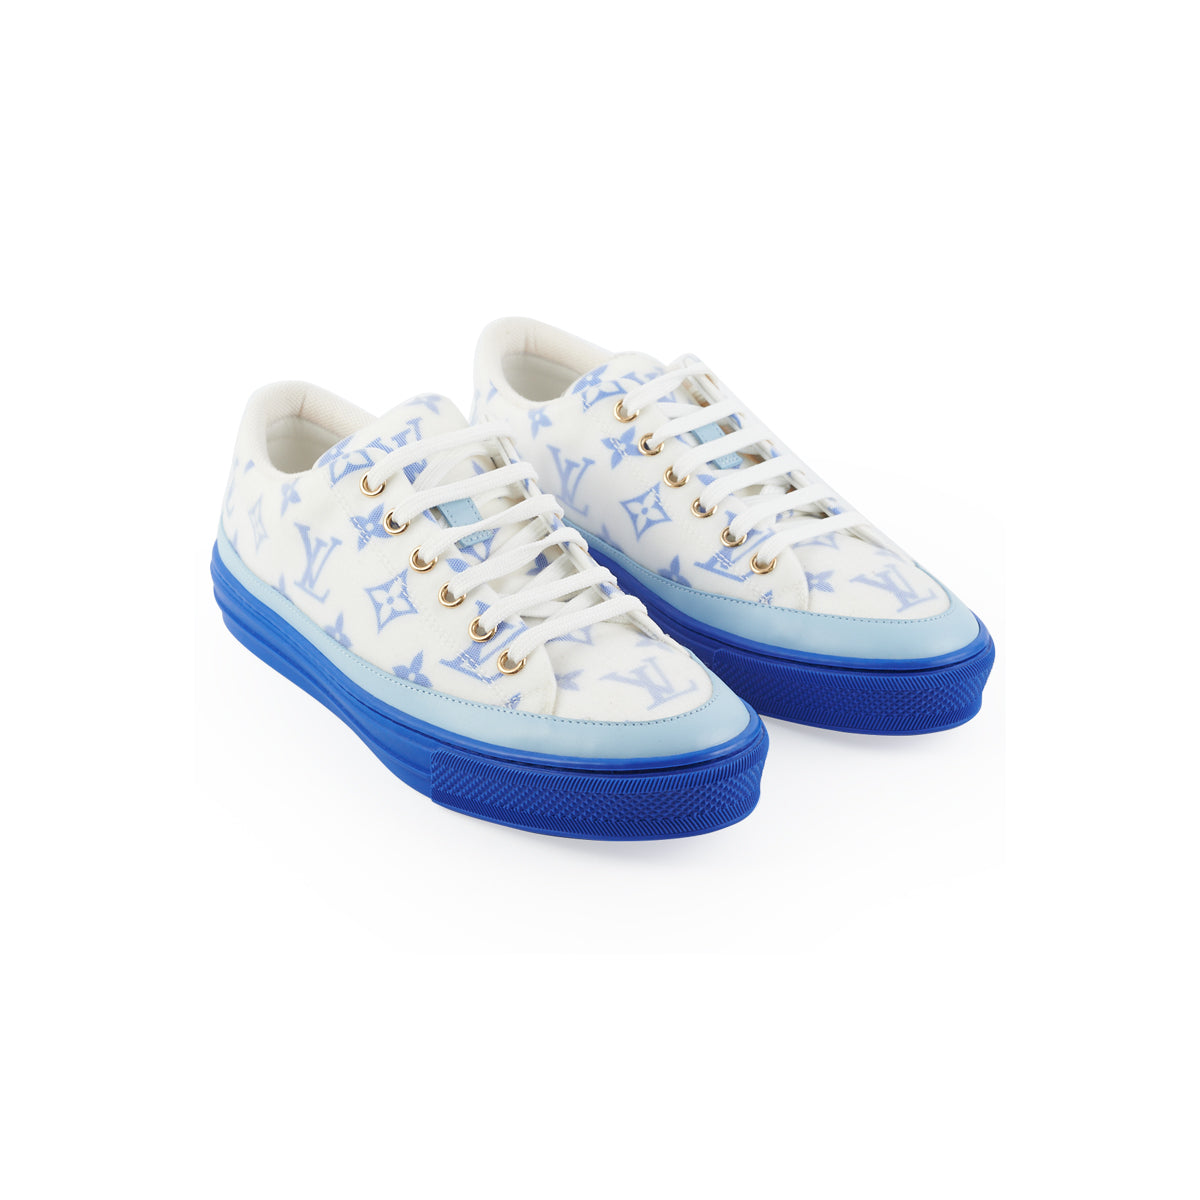 Louis Vuitton Womens Stellar Low Top Sneakers Blue/White Size 37.5